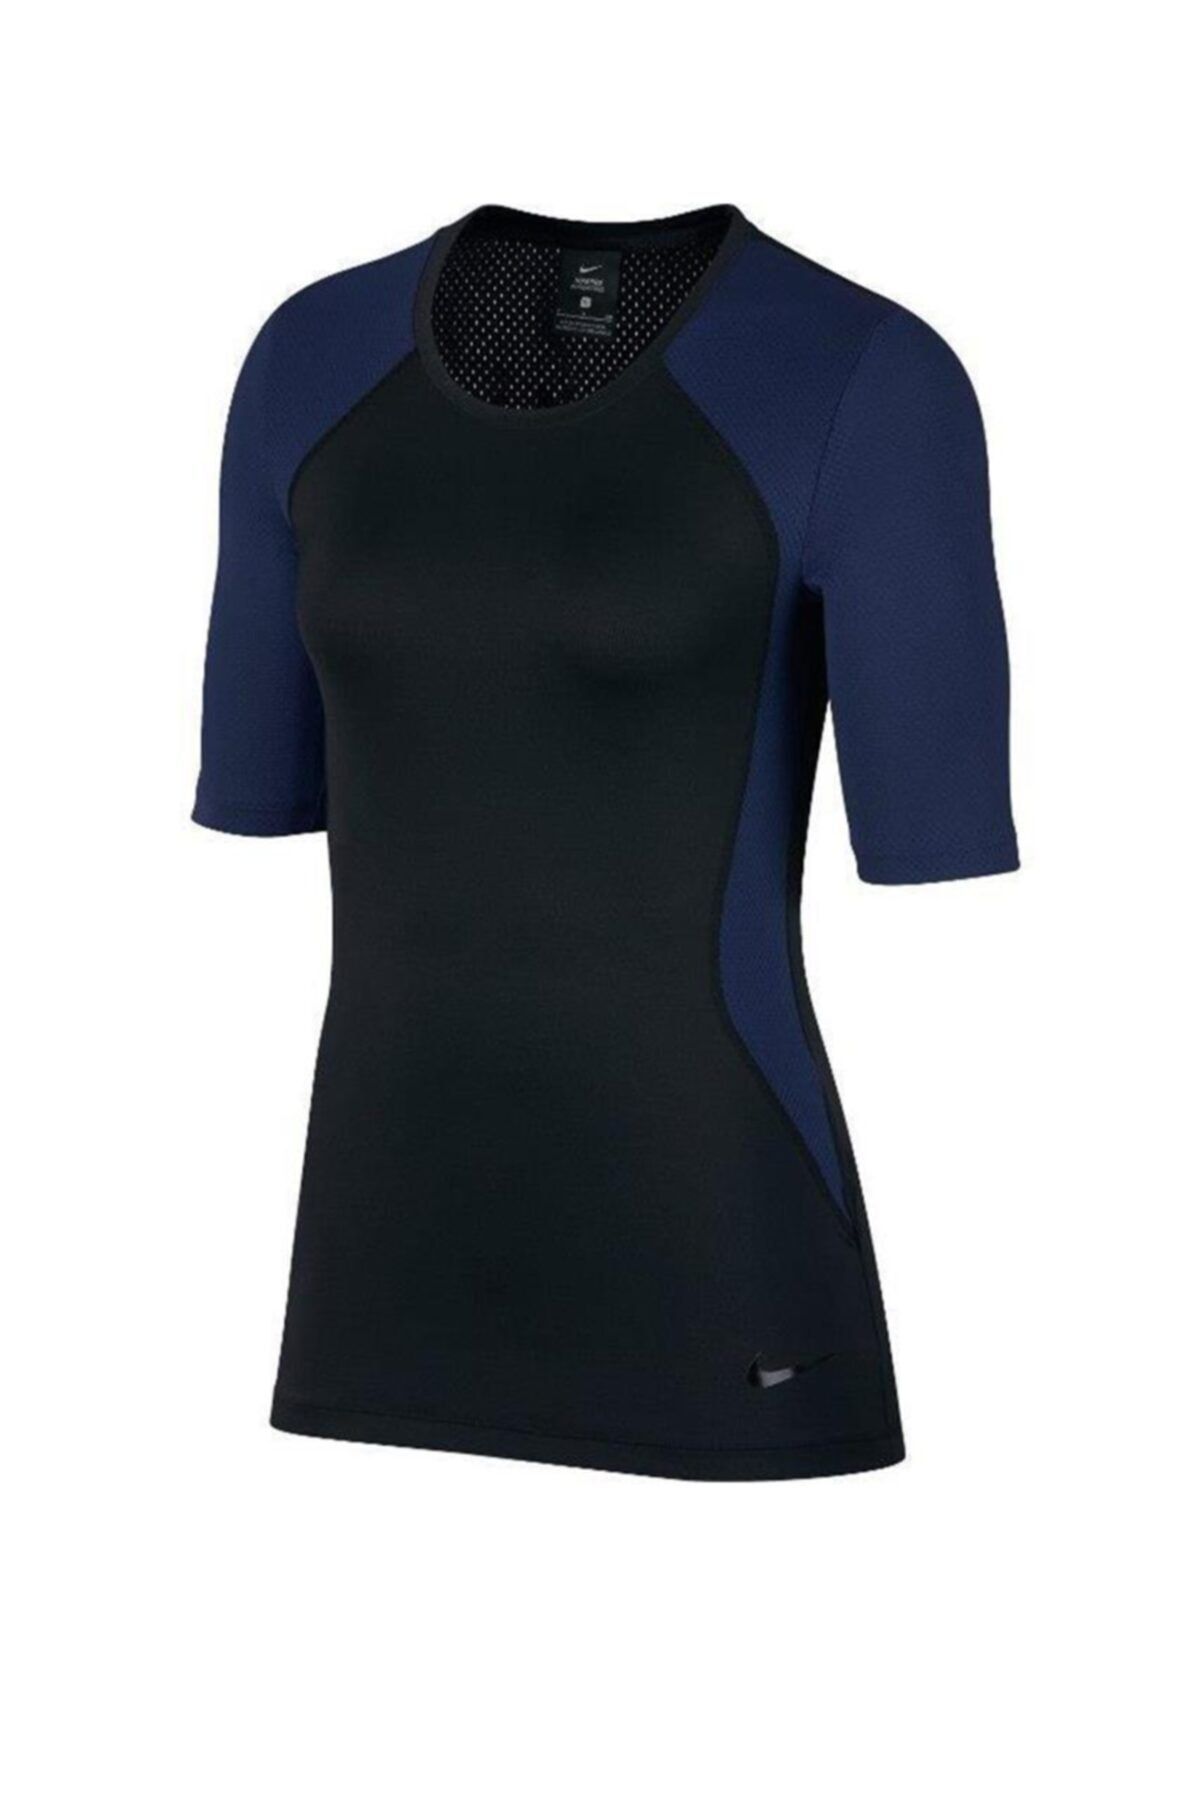 Nike Pro Hypercool Top Ss 889618-010 Kadın Tişört